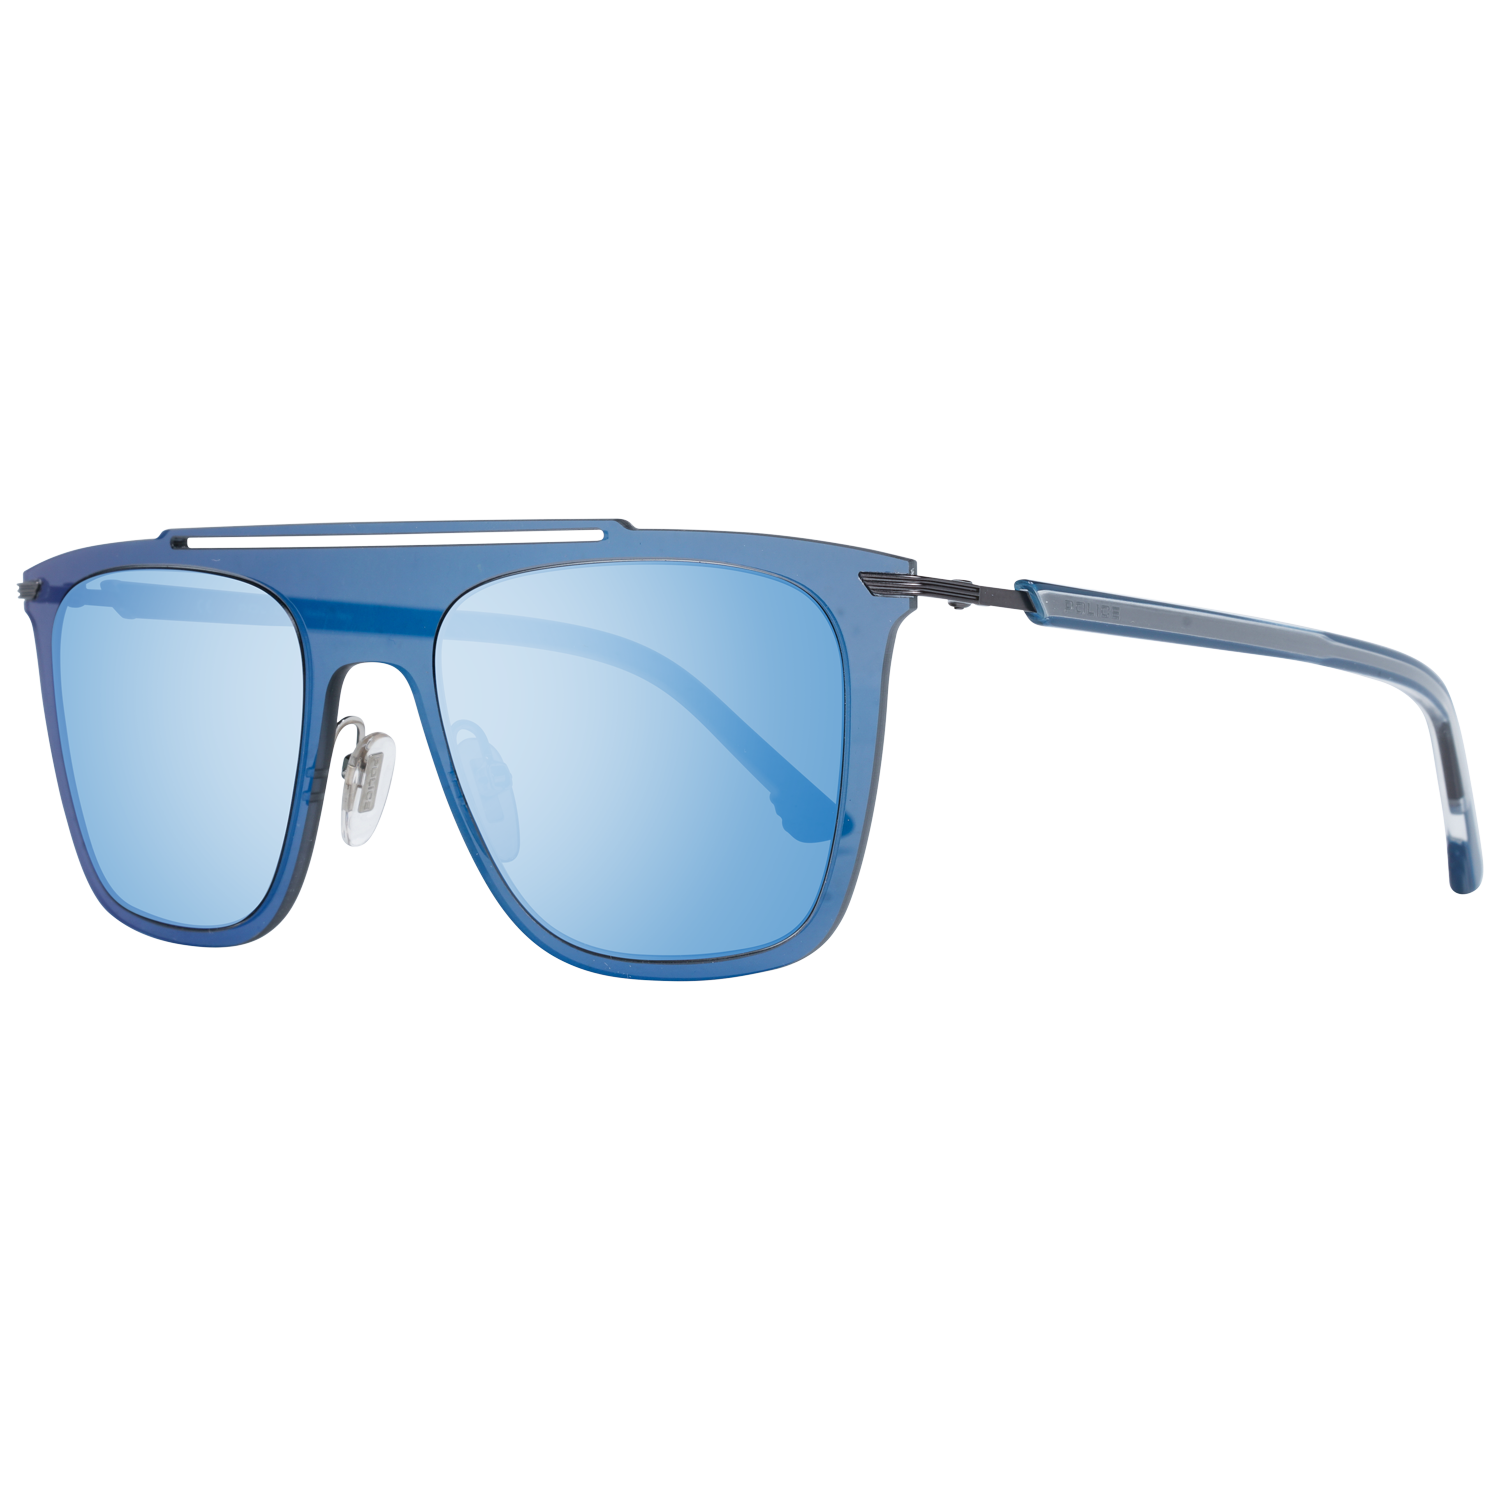 Police Sunglasses Police Sunglasses Men's SPL581M 627B 52 Eyeglasses Eyewear UK USA Australia 